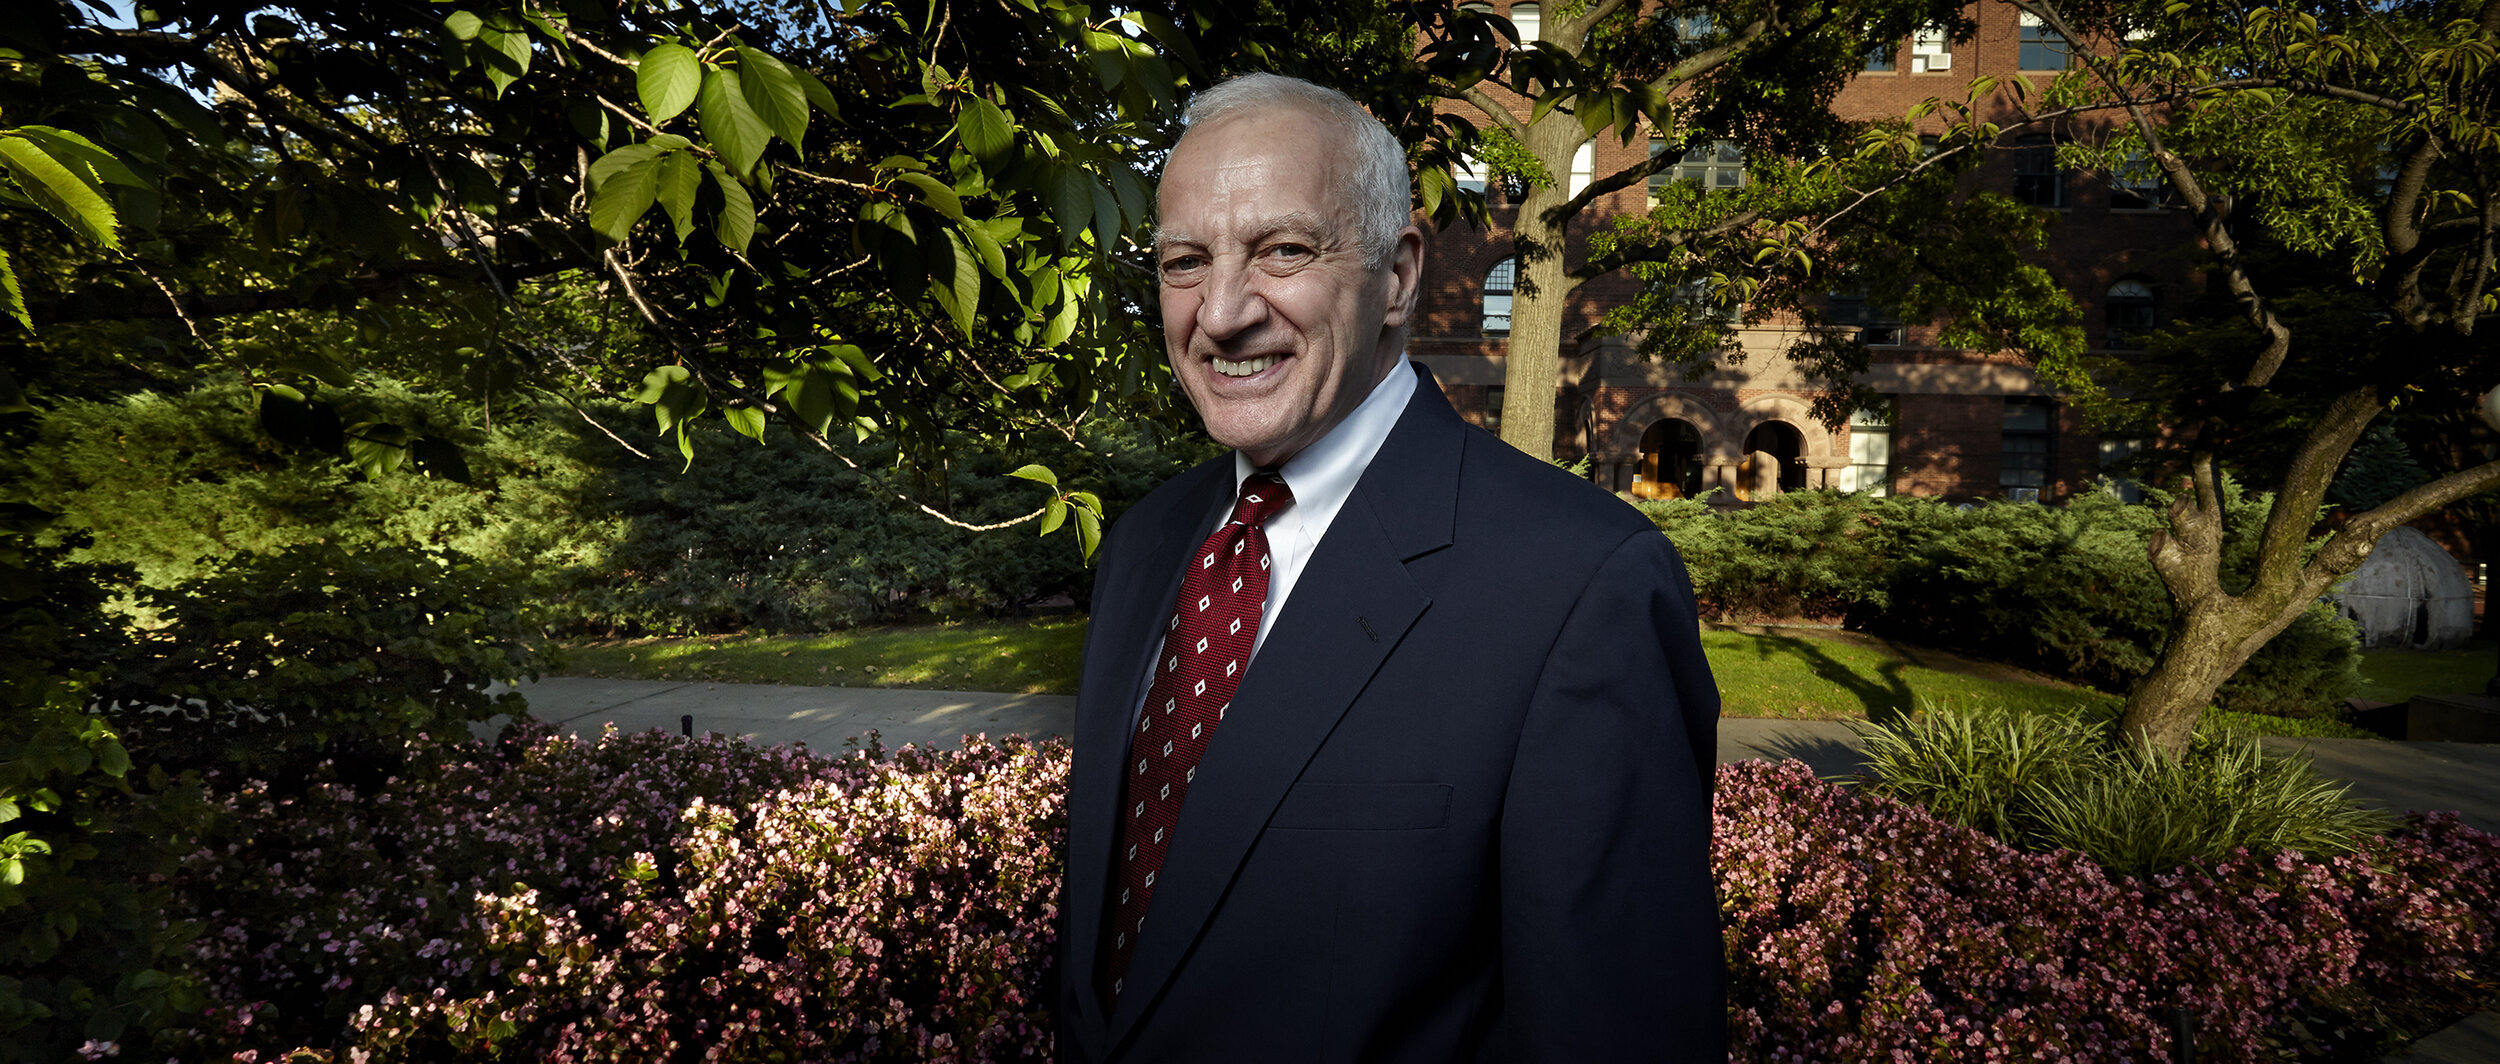 Dr. Thomas F. Schutte | President of The Pratt Institute | Clinton Hill